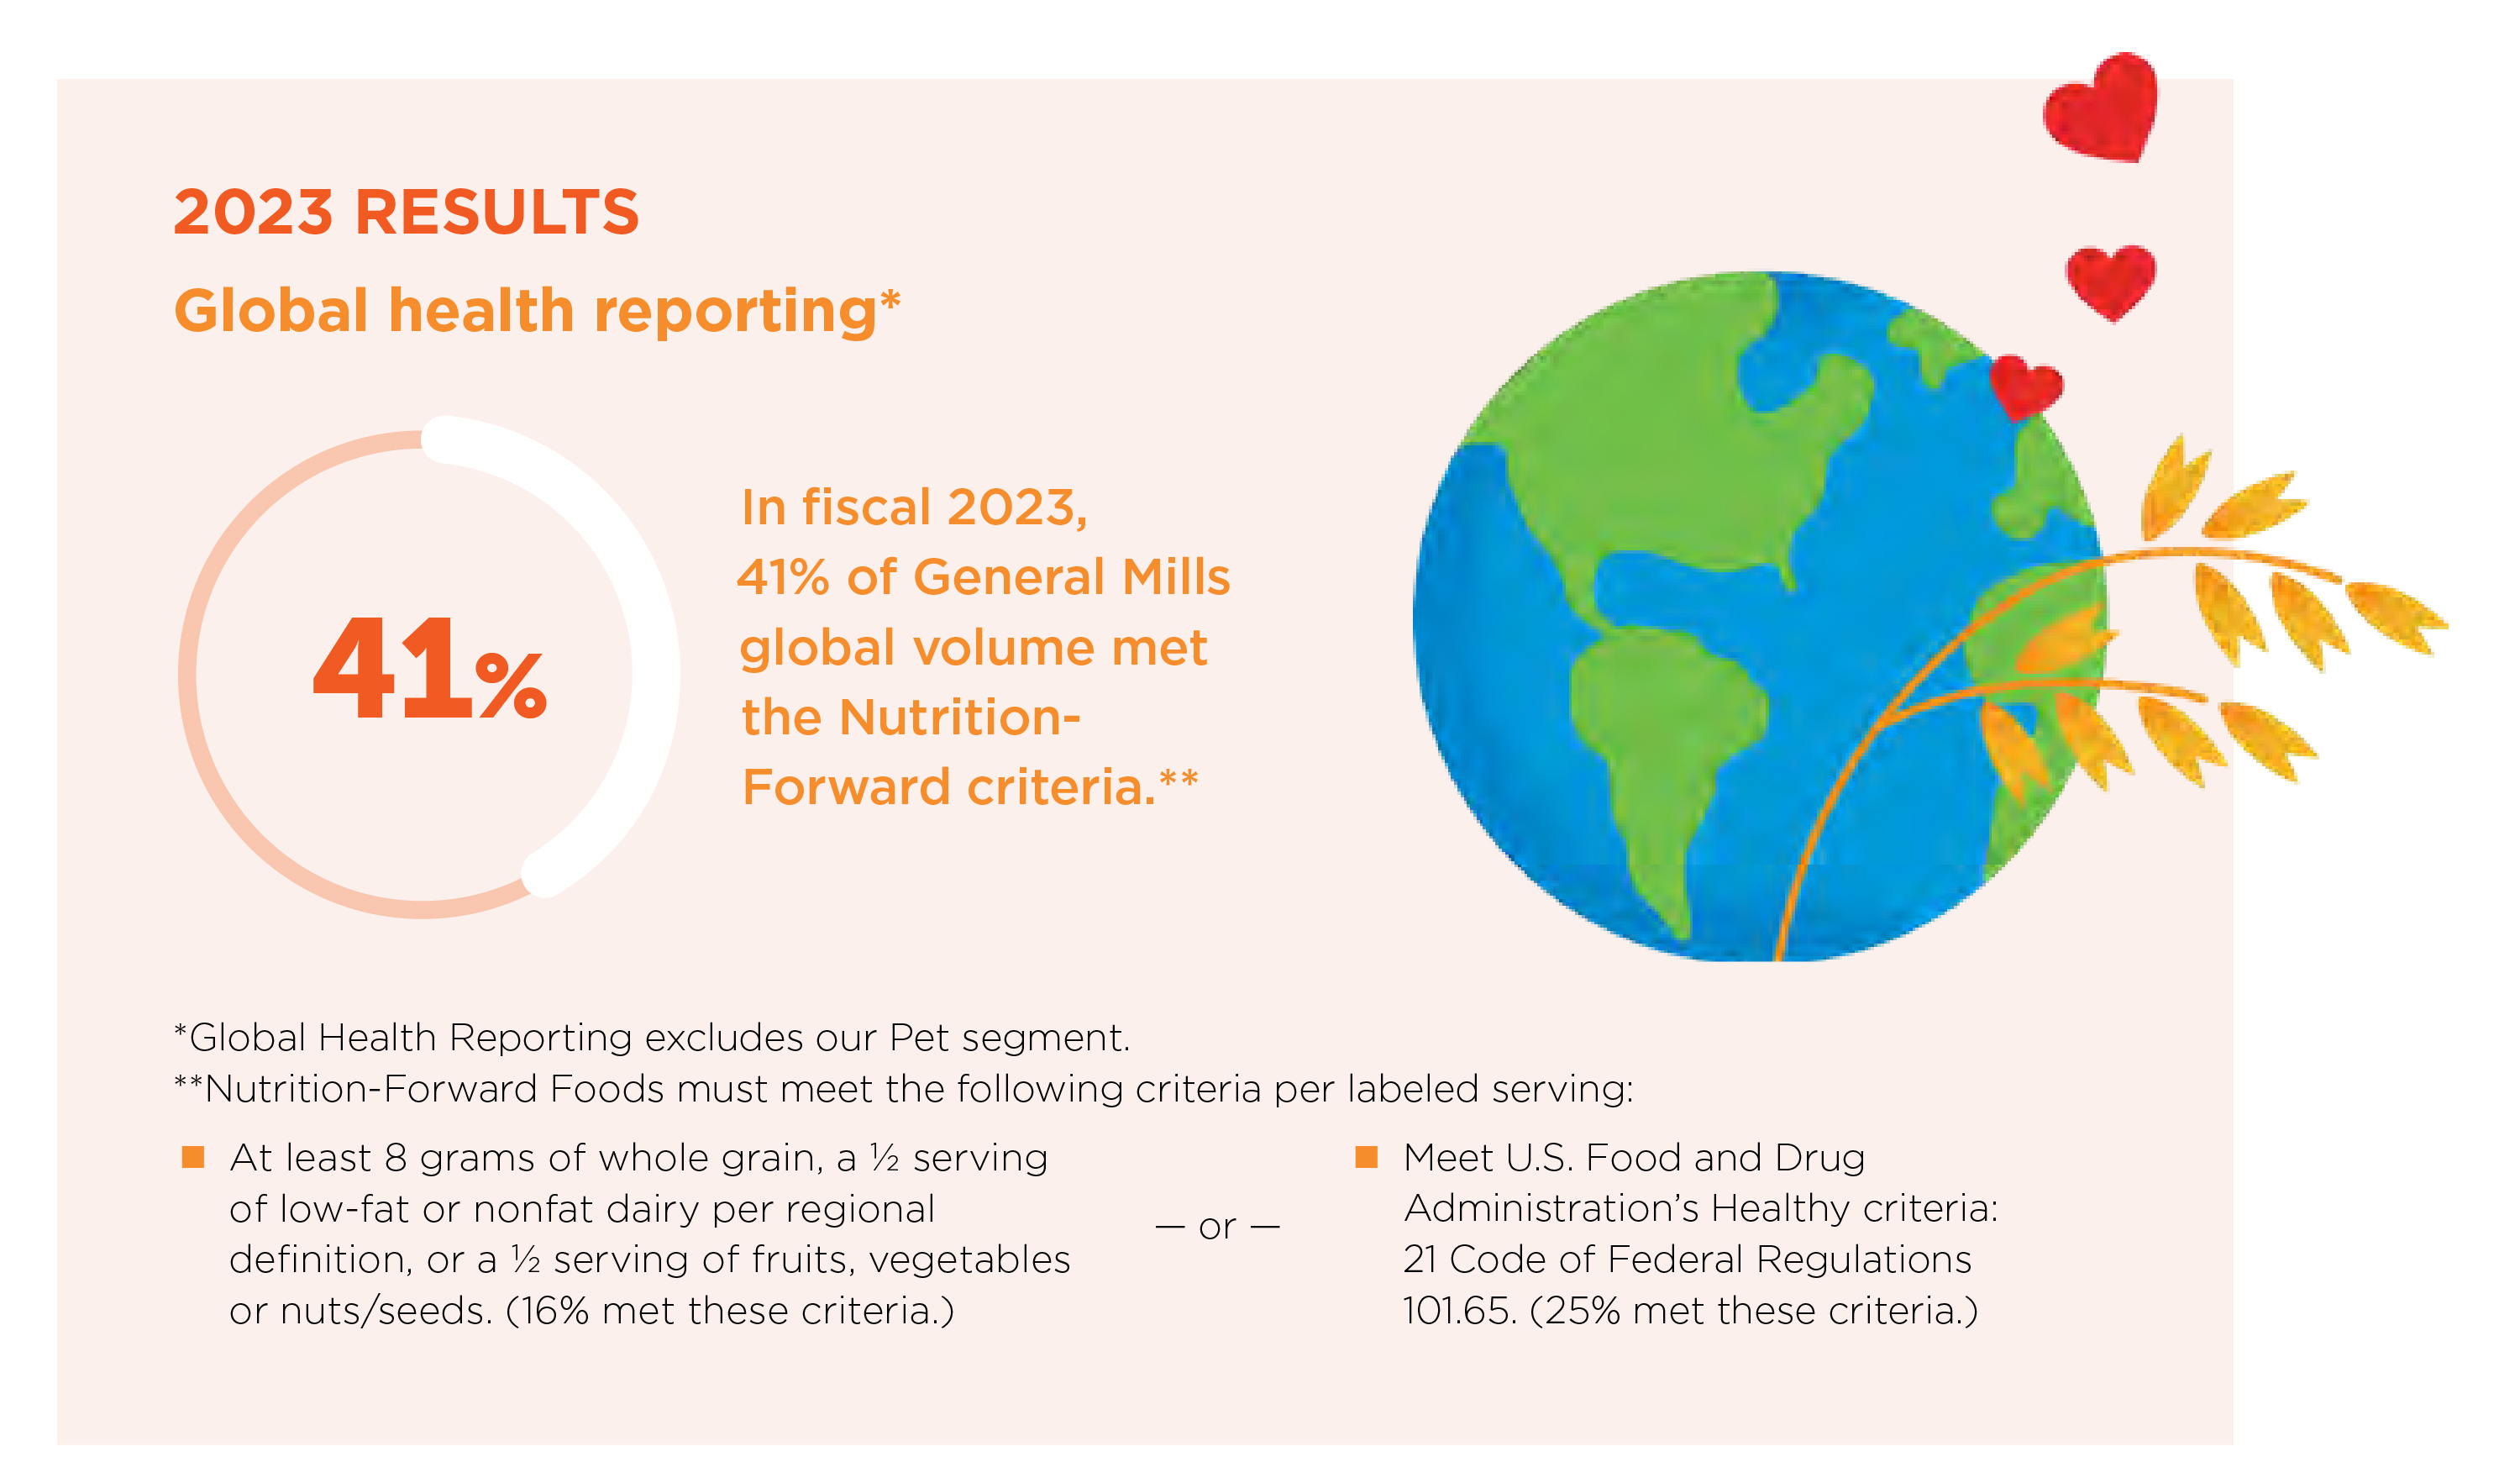 In fiscal 2023, 41% of General Mills global volume met the Nutrition-Forward criteria